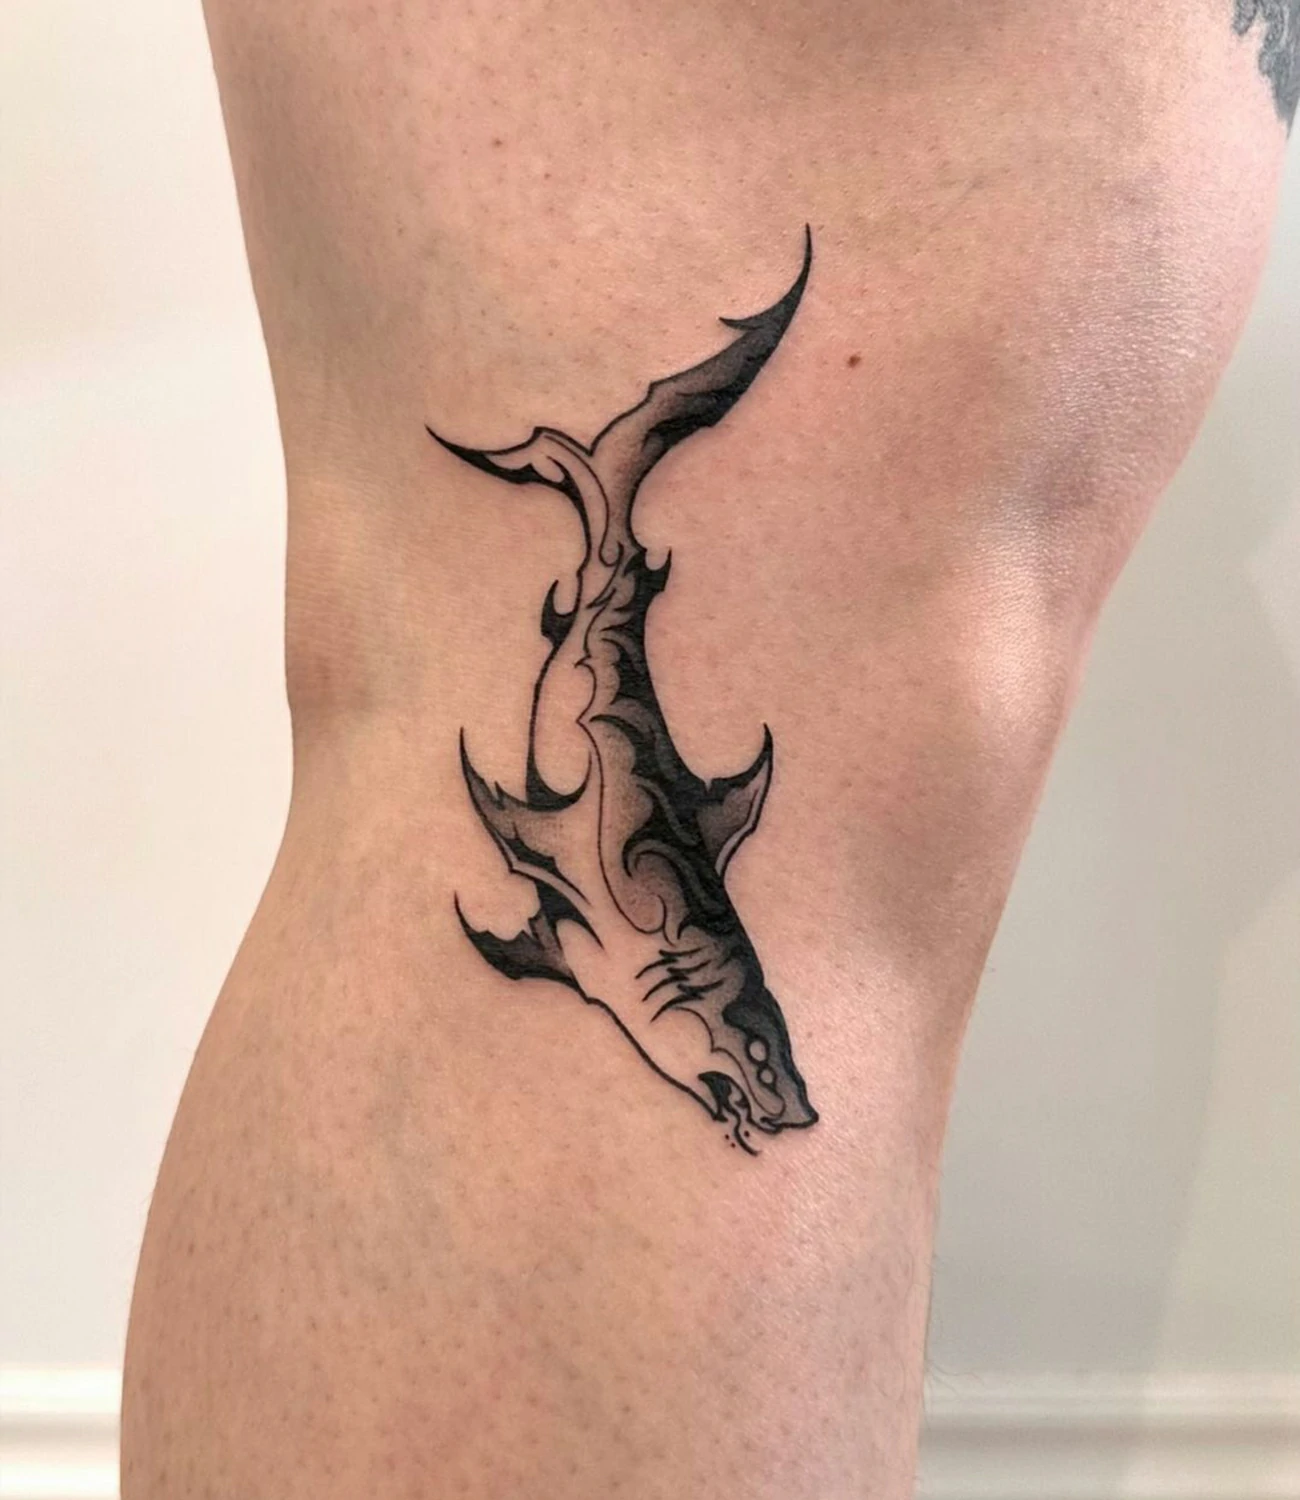 Shark Knee Tattoo